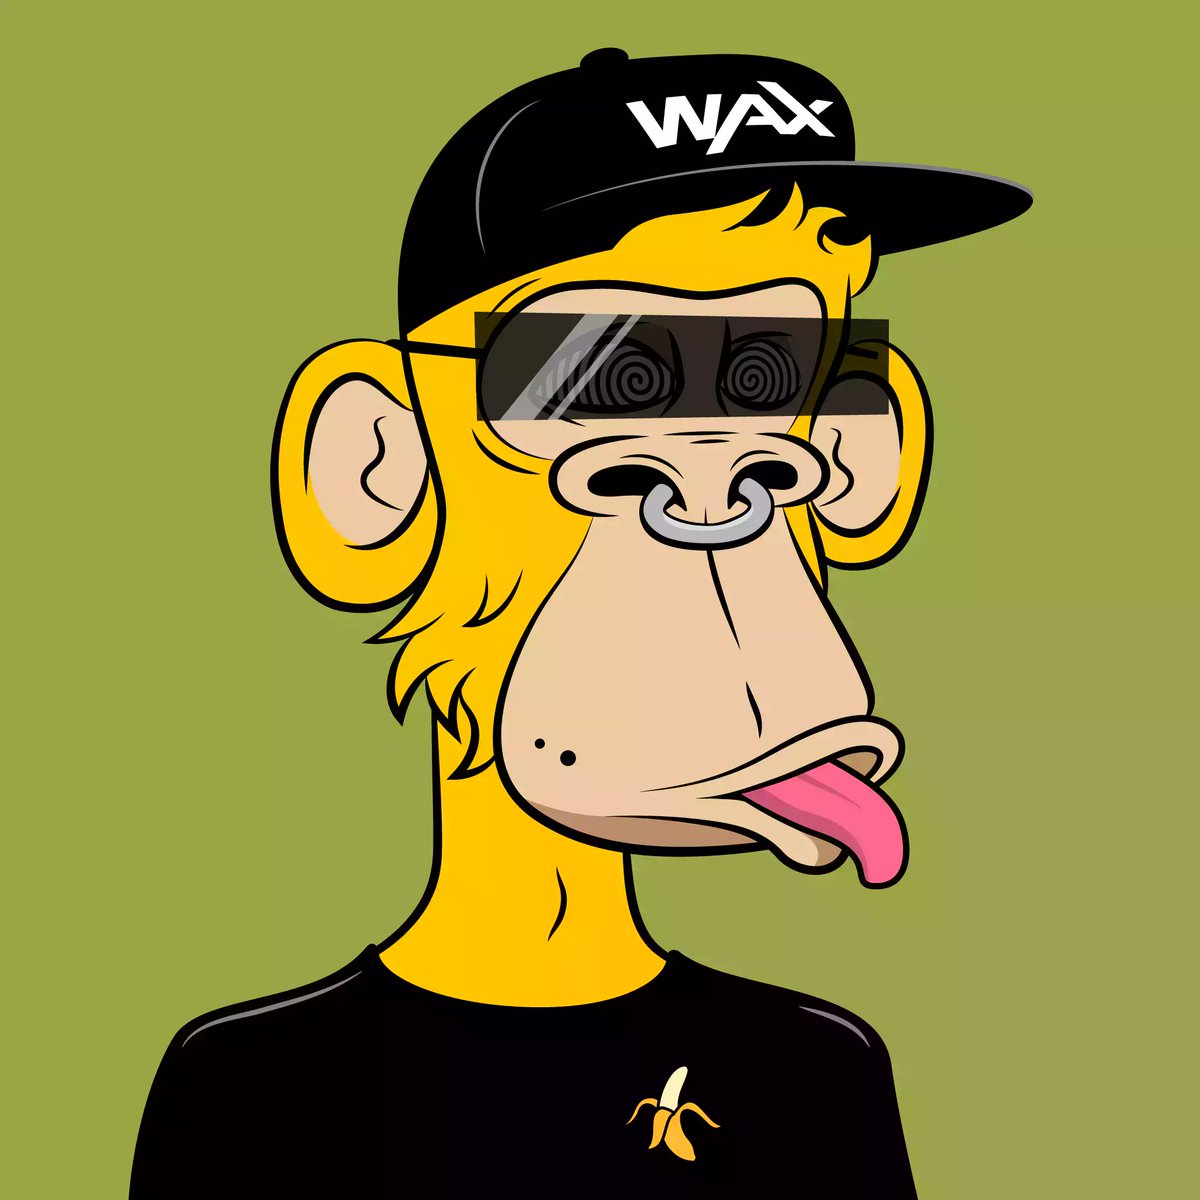 @waxapes yellow wax hypnotized #WARC ape,, i am speechless, hey  #waxfam #waxians did you grabbed yours?